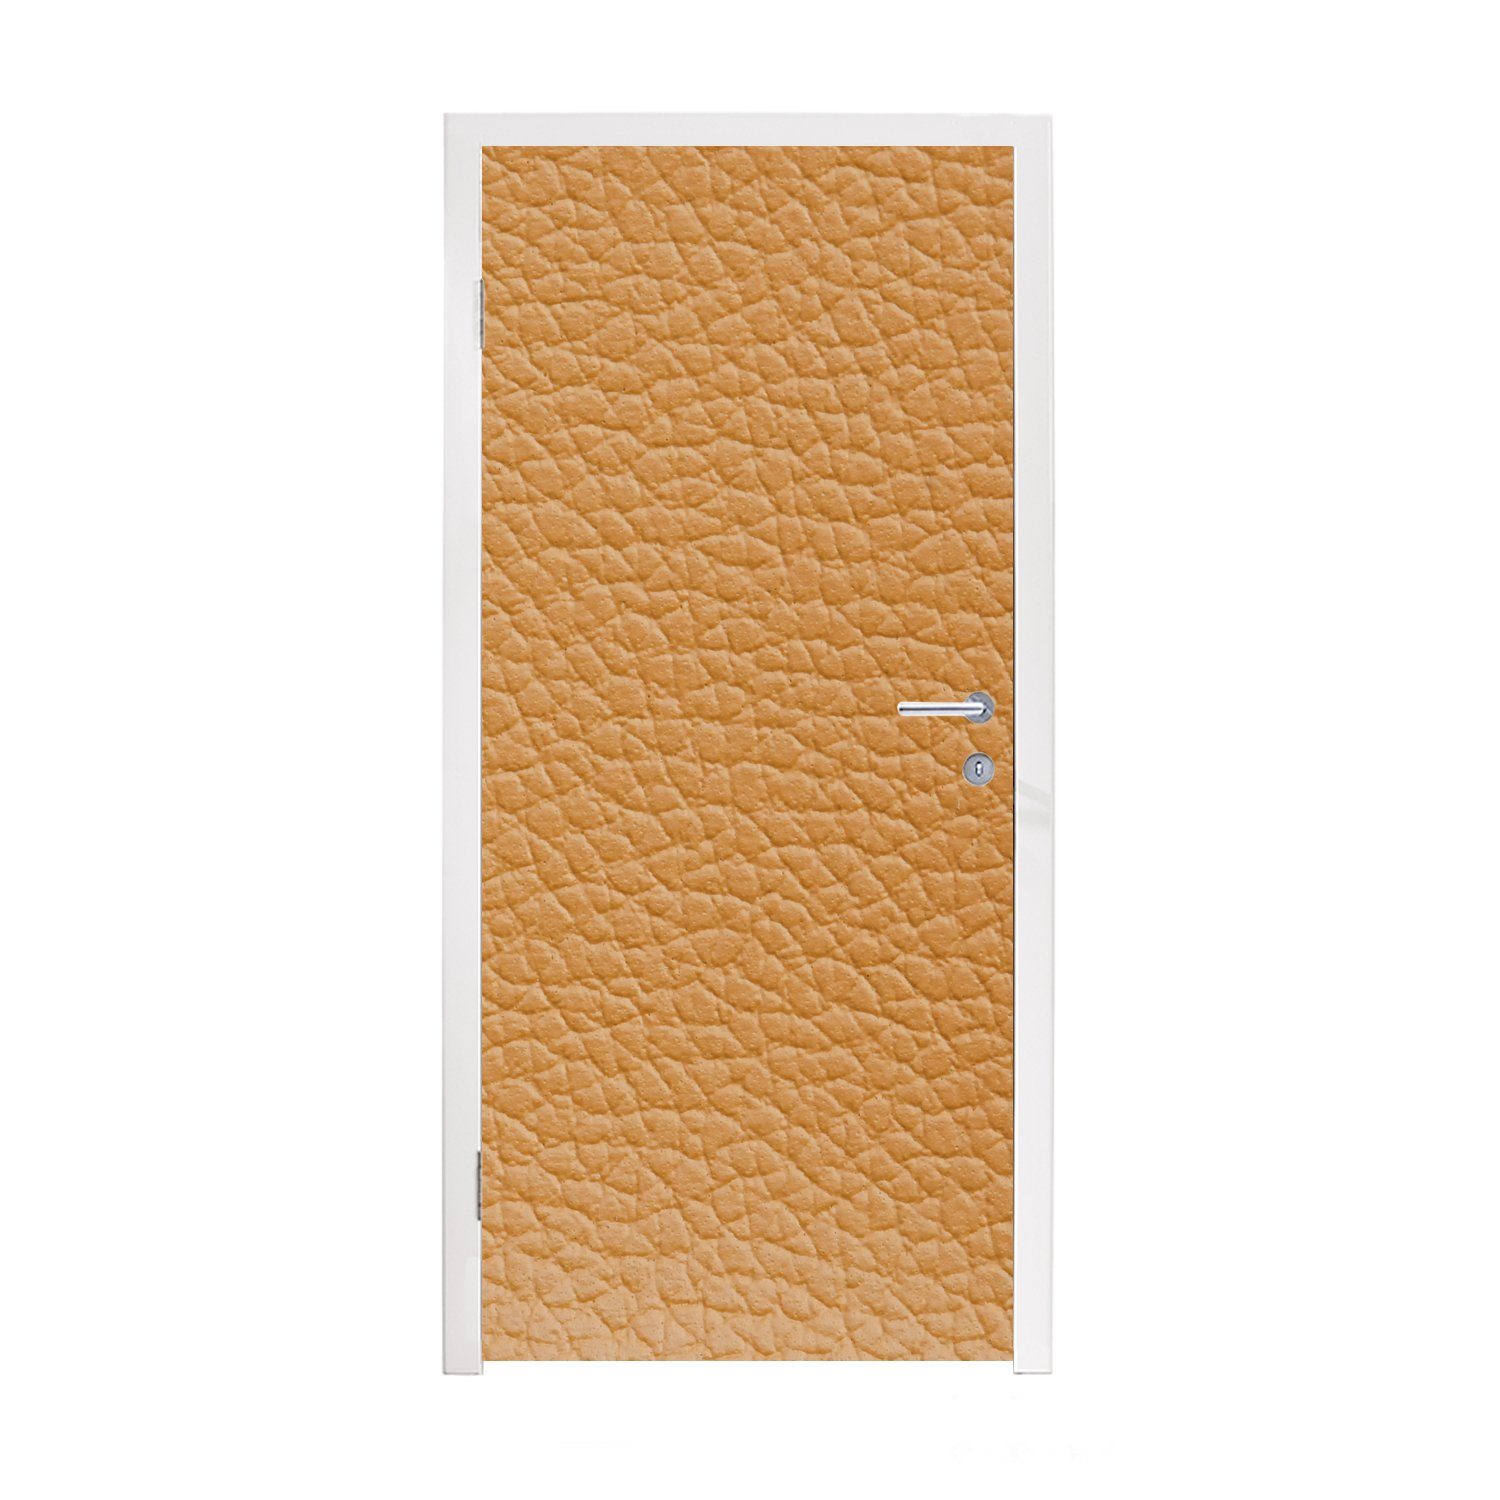 MuchoWow Türtapete Leder - Strukturiert - Leder-Optik - Orange, Matt, bedruckt, (1 St), Fototapete für Tür, Türaufkleber, 75x205 cm